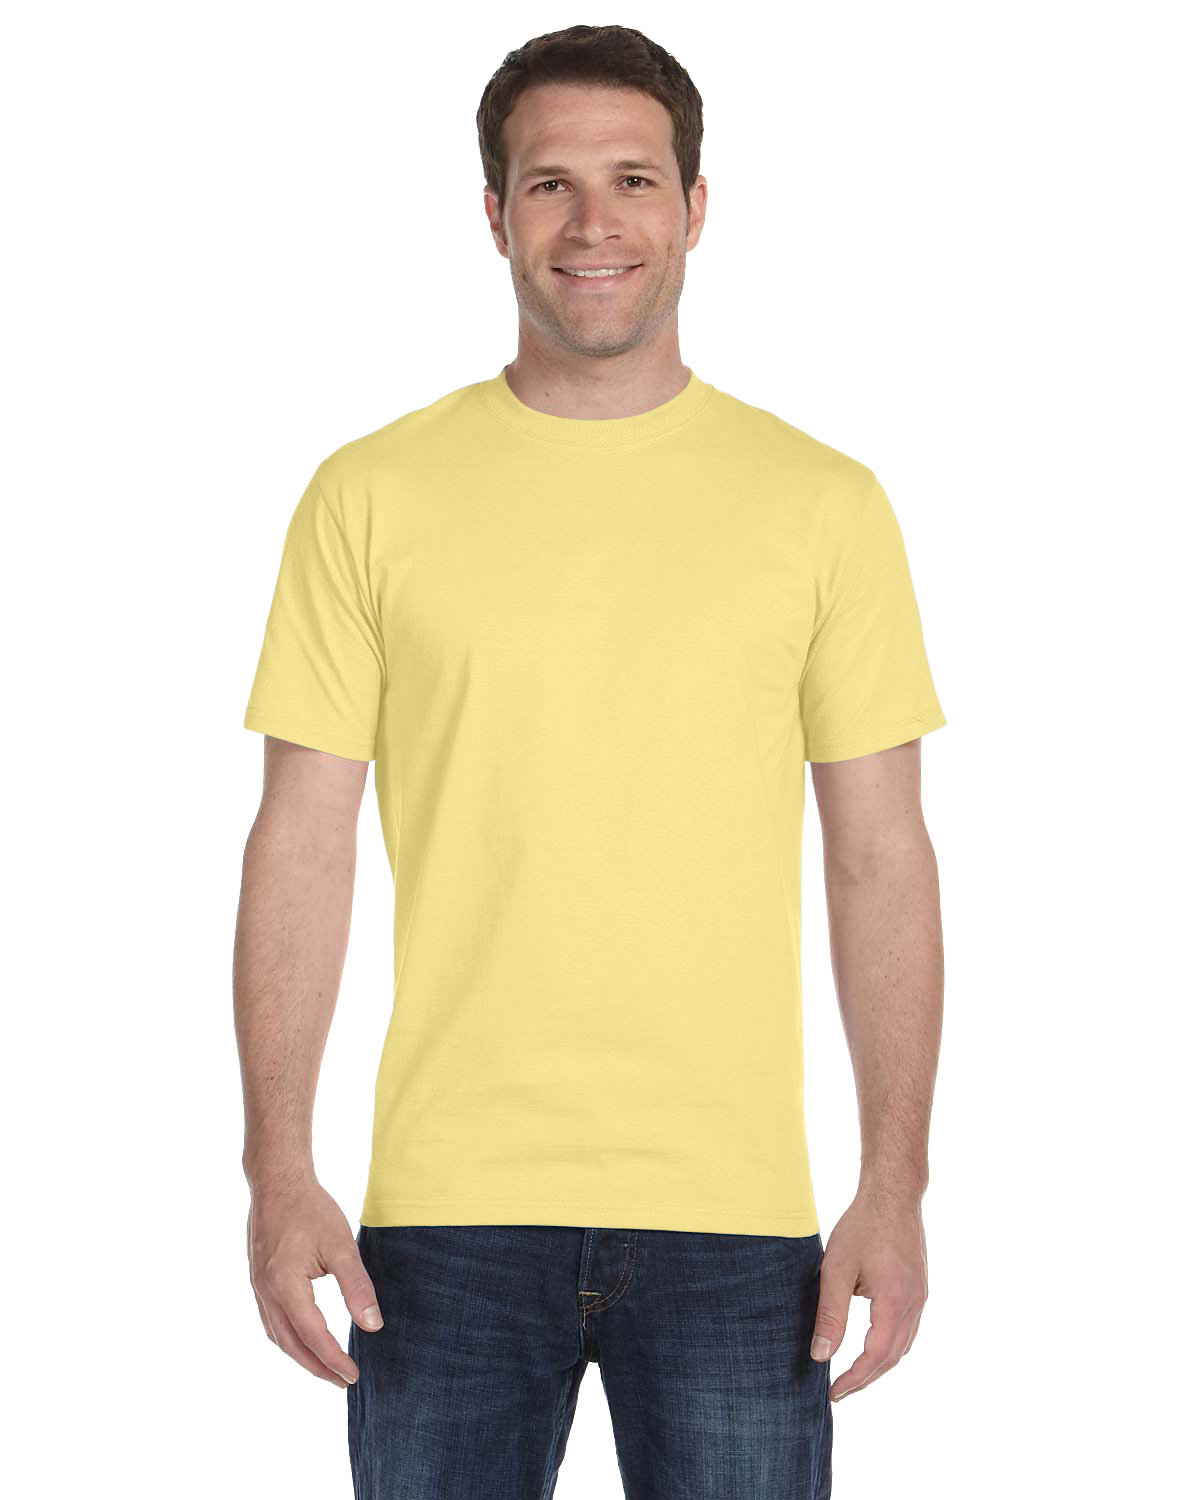 Hanes Unisex 5.2 oz., Comfortsoft® Cotton T-Shirt DAFFODIL YELLOW 